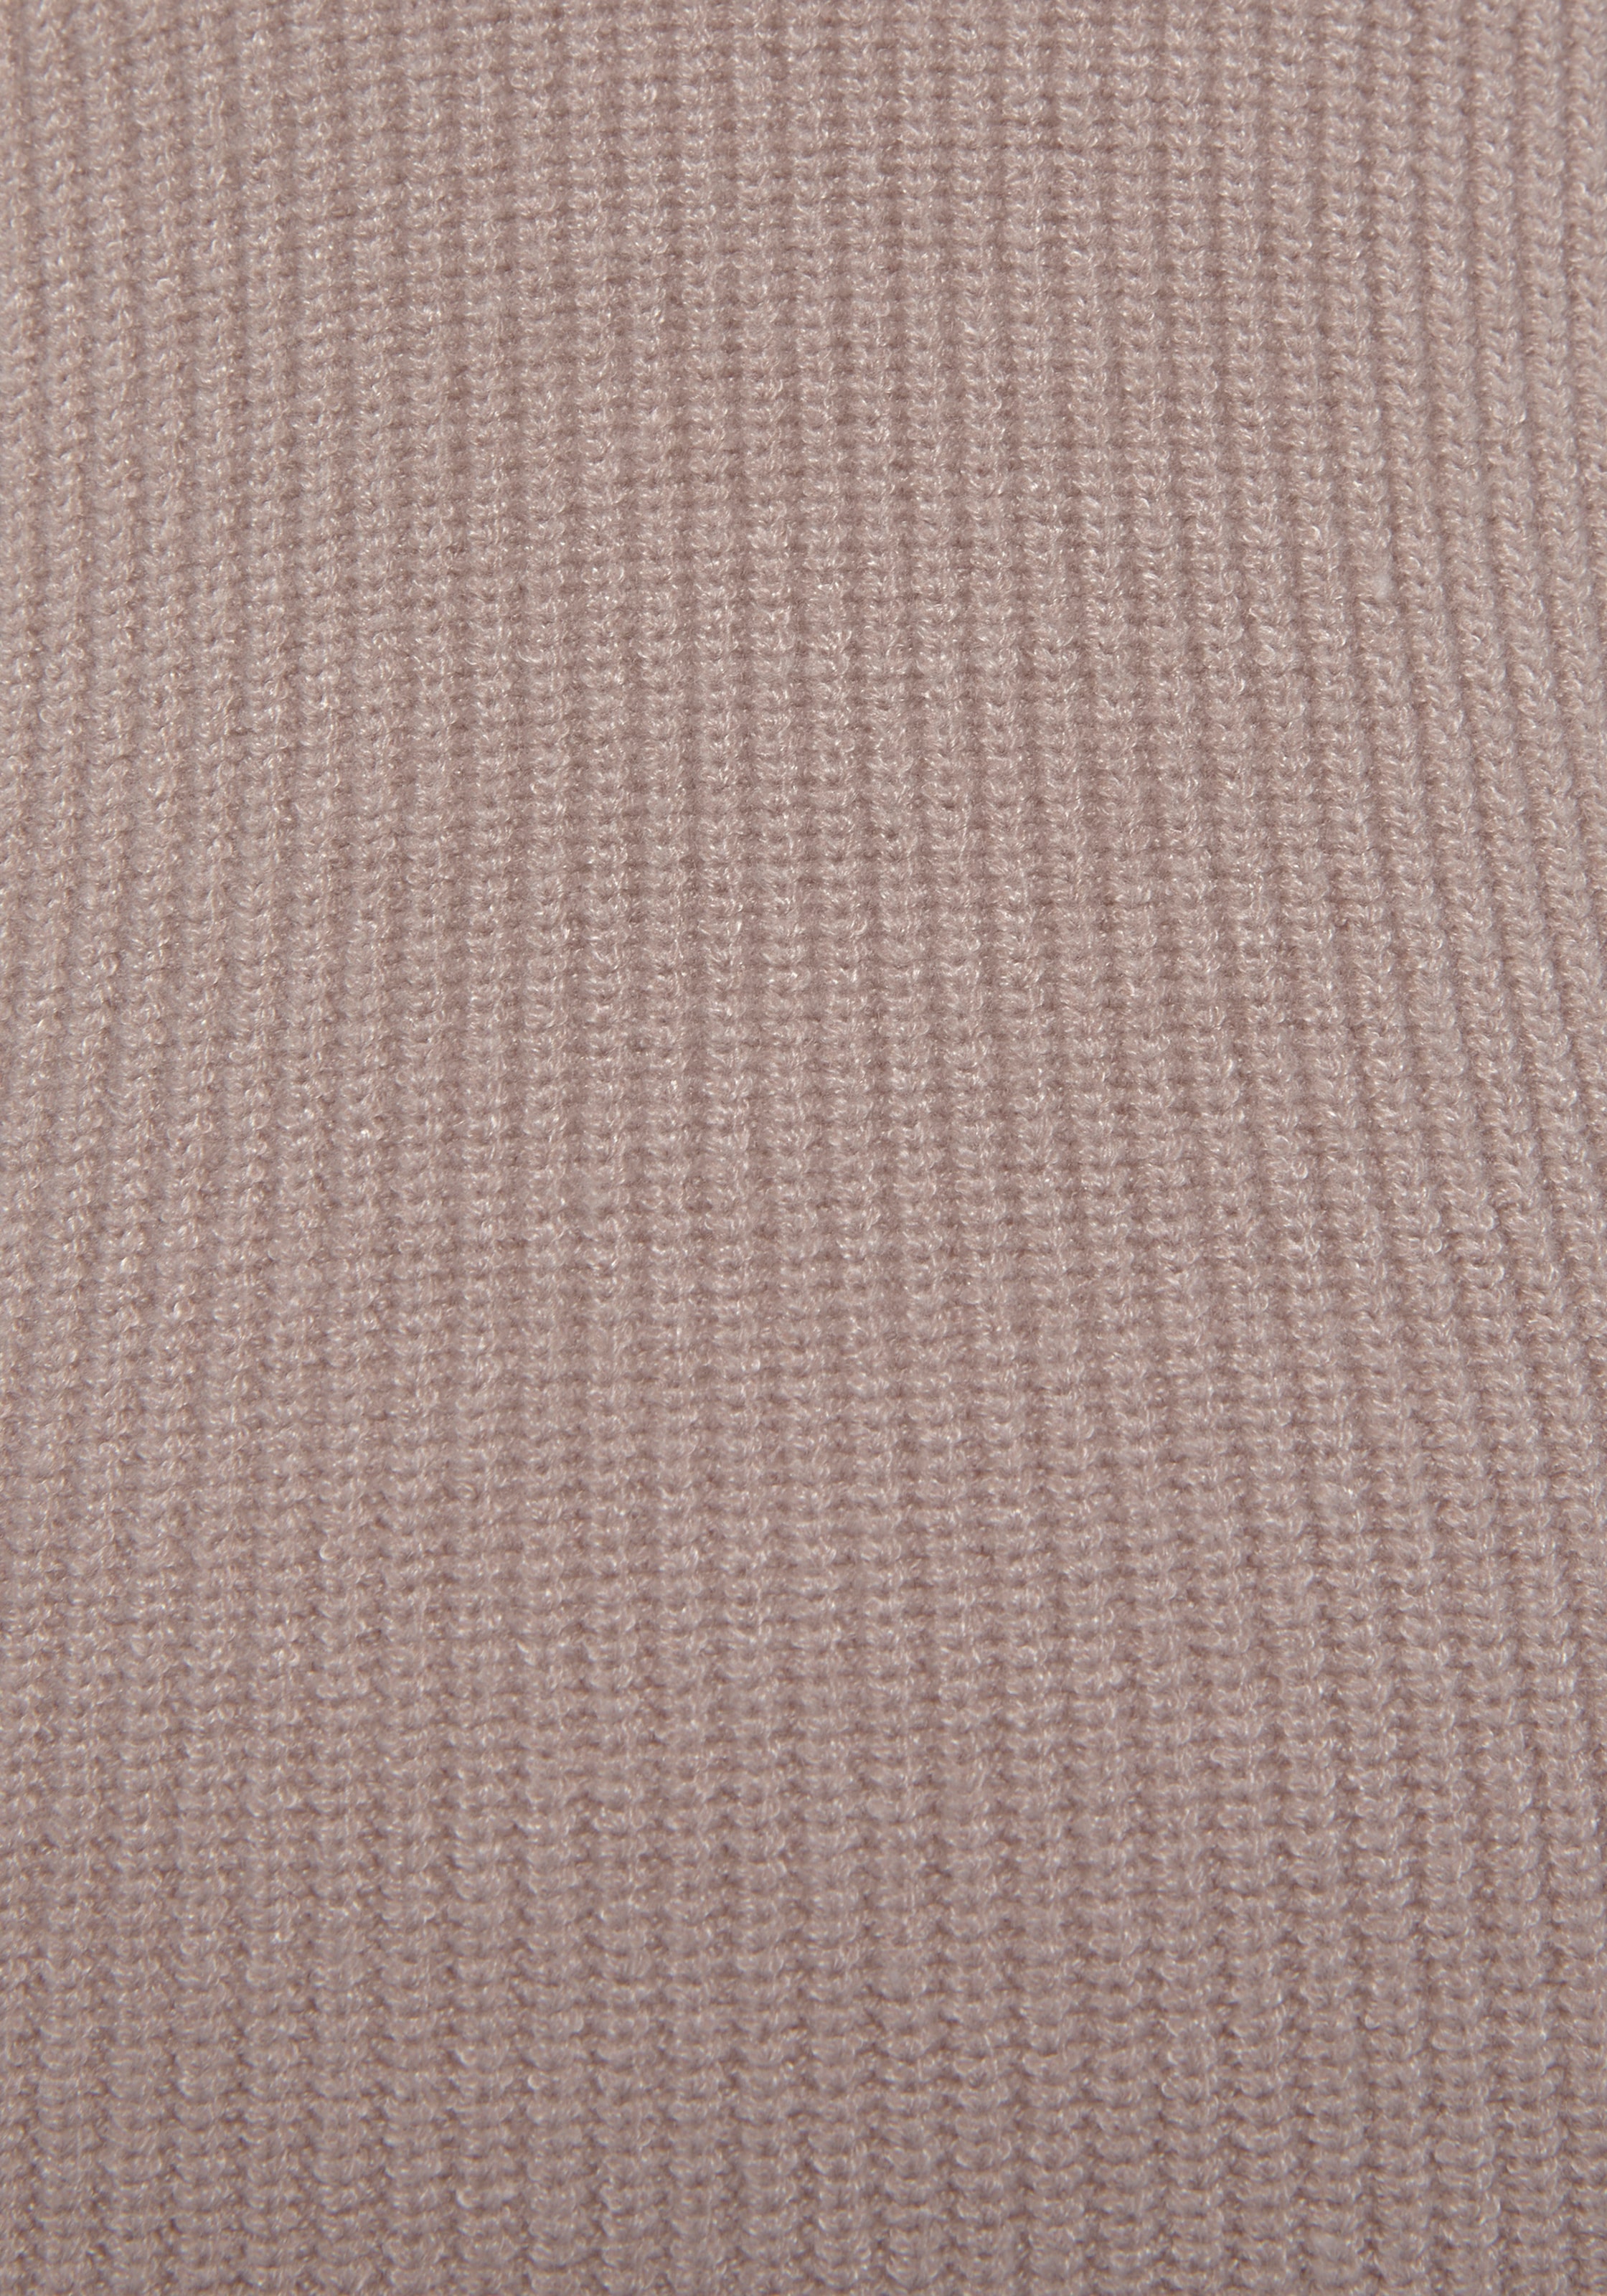 LASCANA Kurzarmpullover, aus Rippstrick, eleganter Damenpullover in T-Shirt-Form, Basic